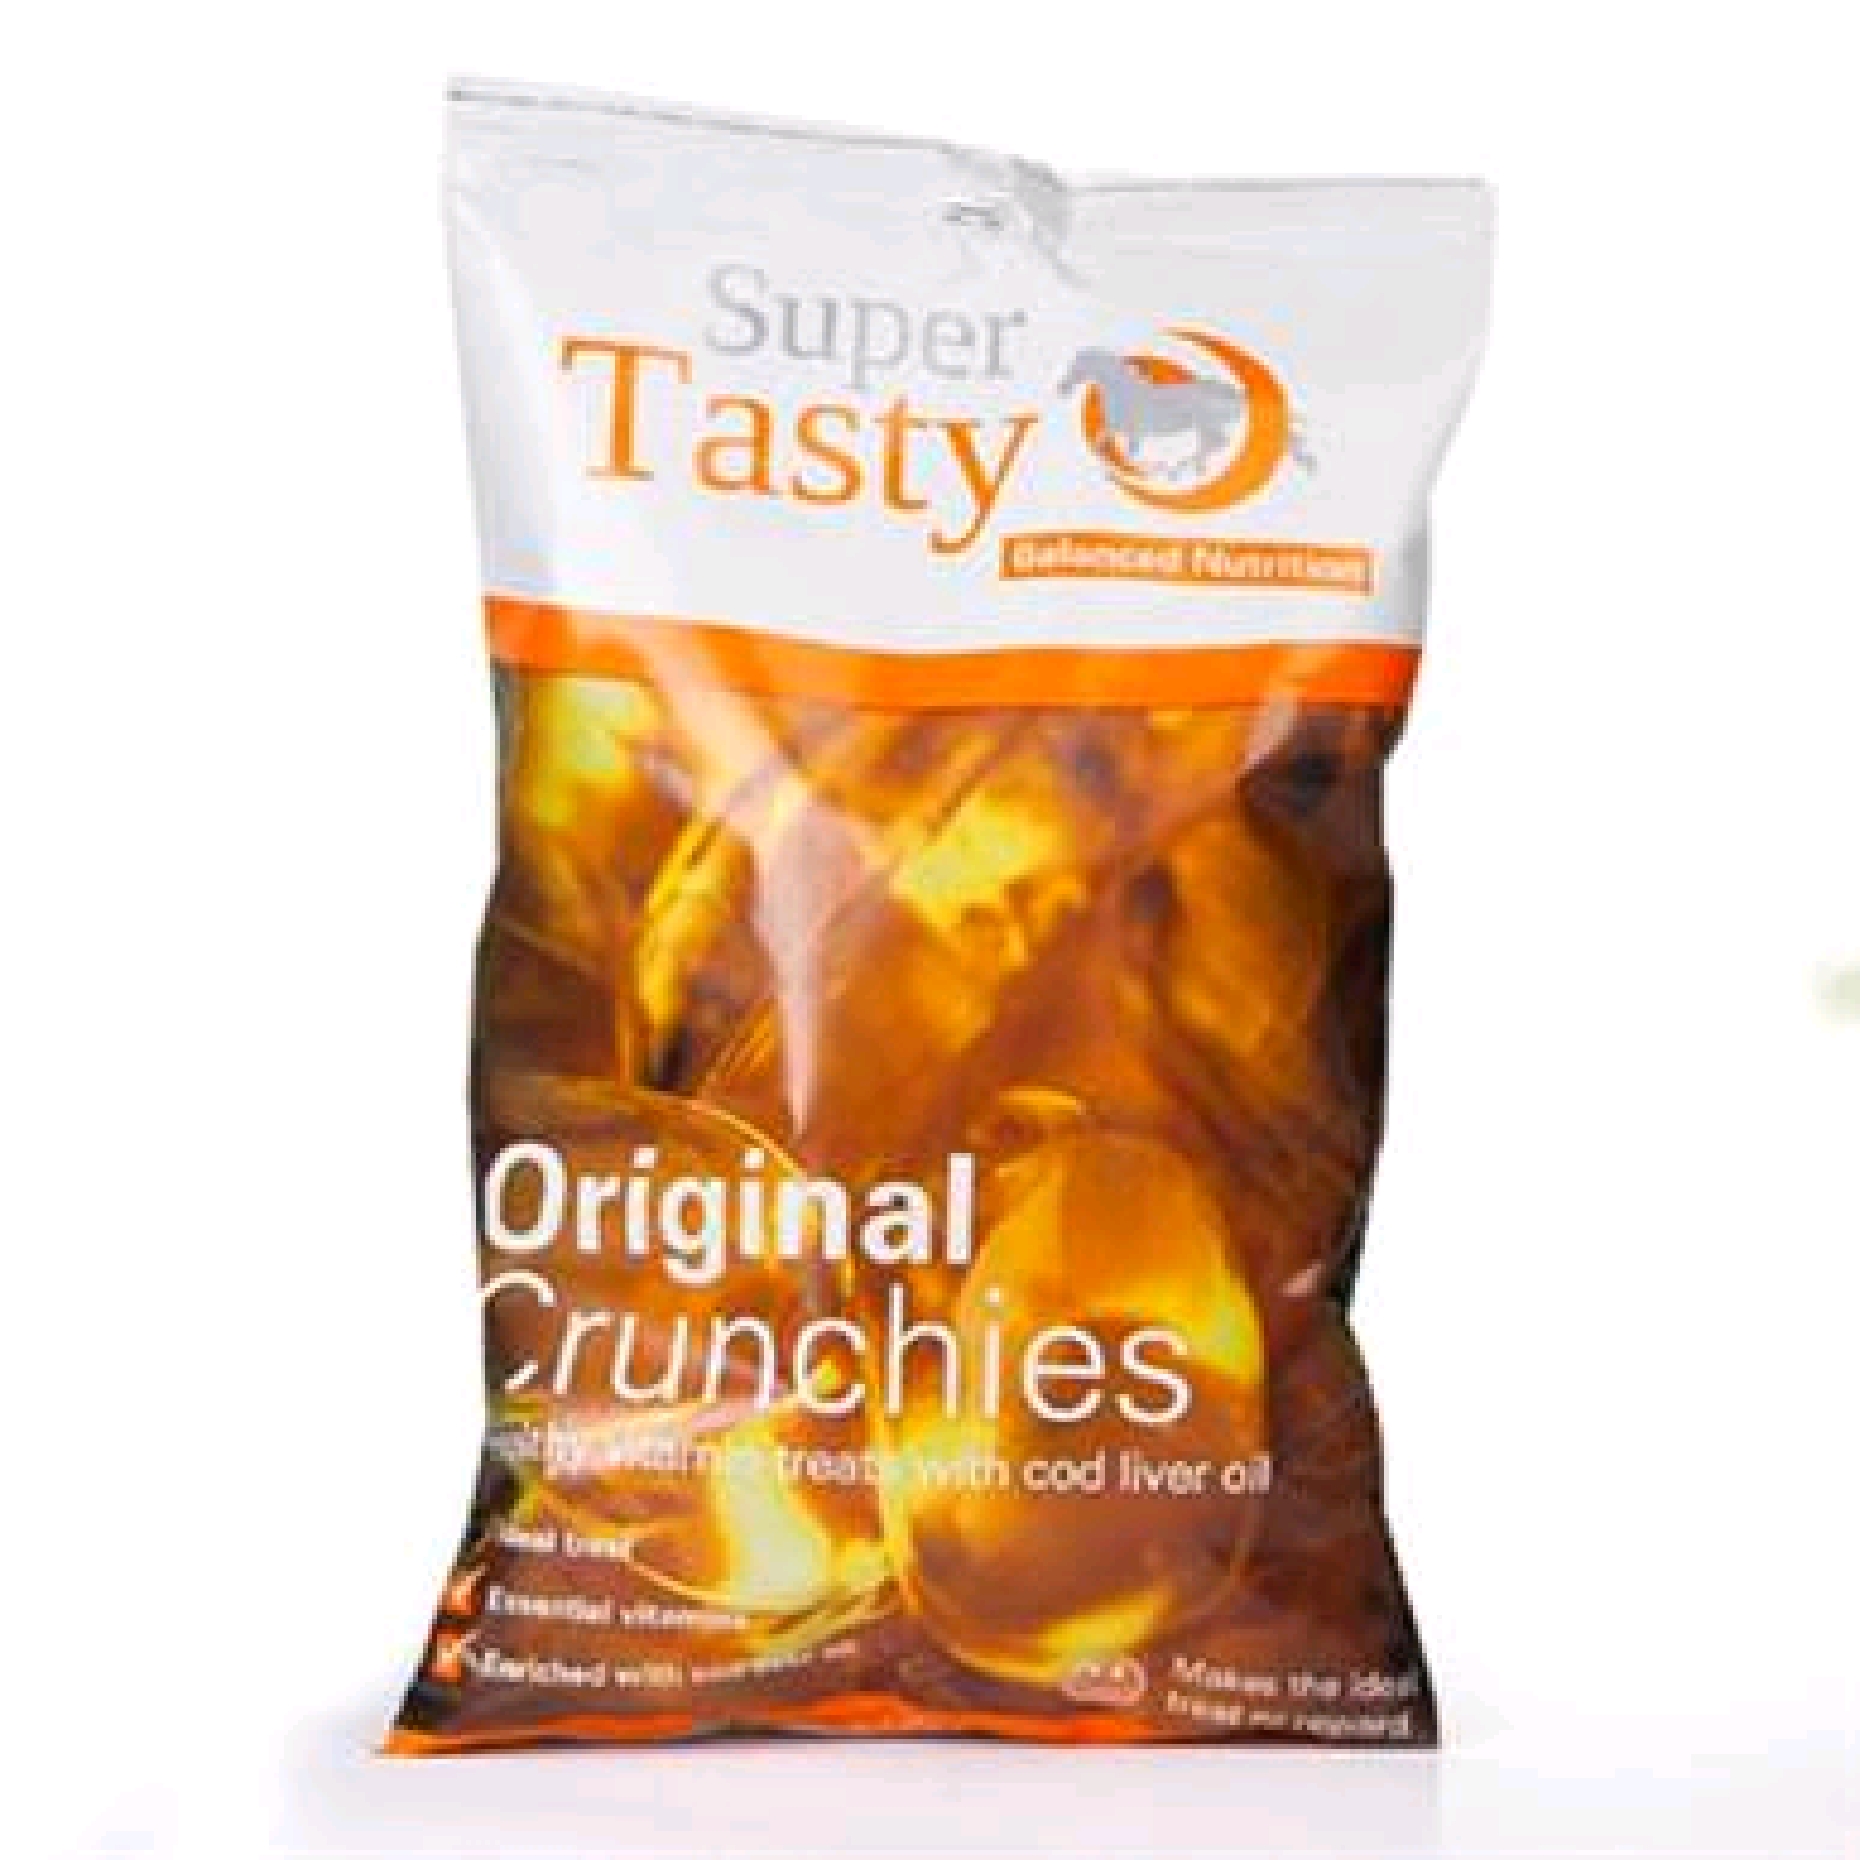 Super Tasty Original Crunchies